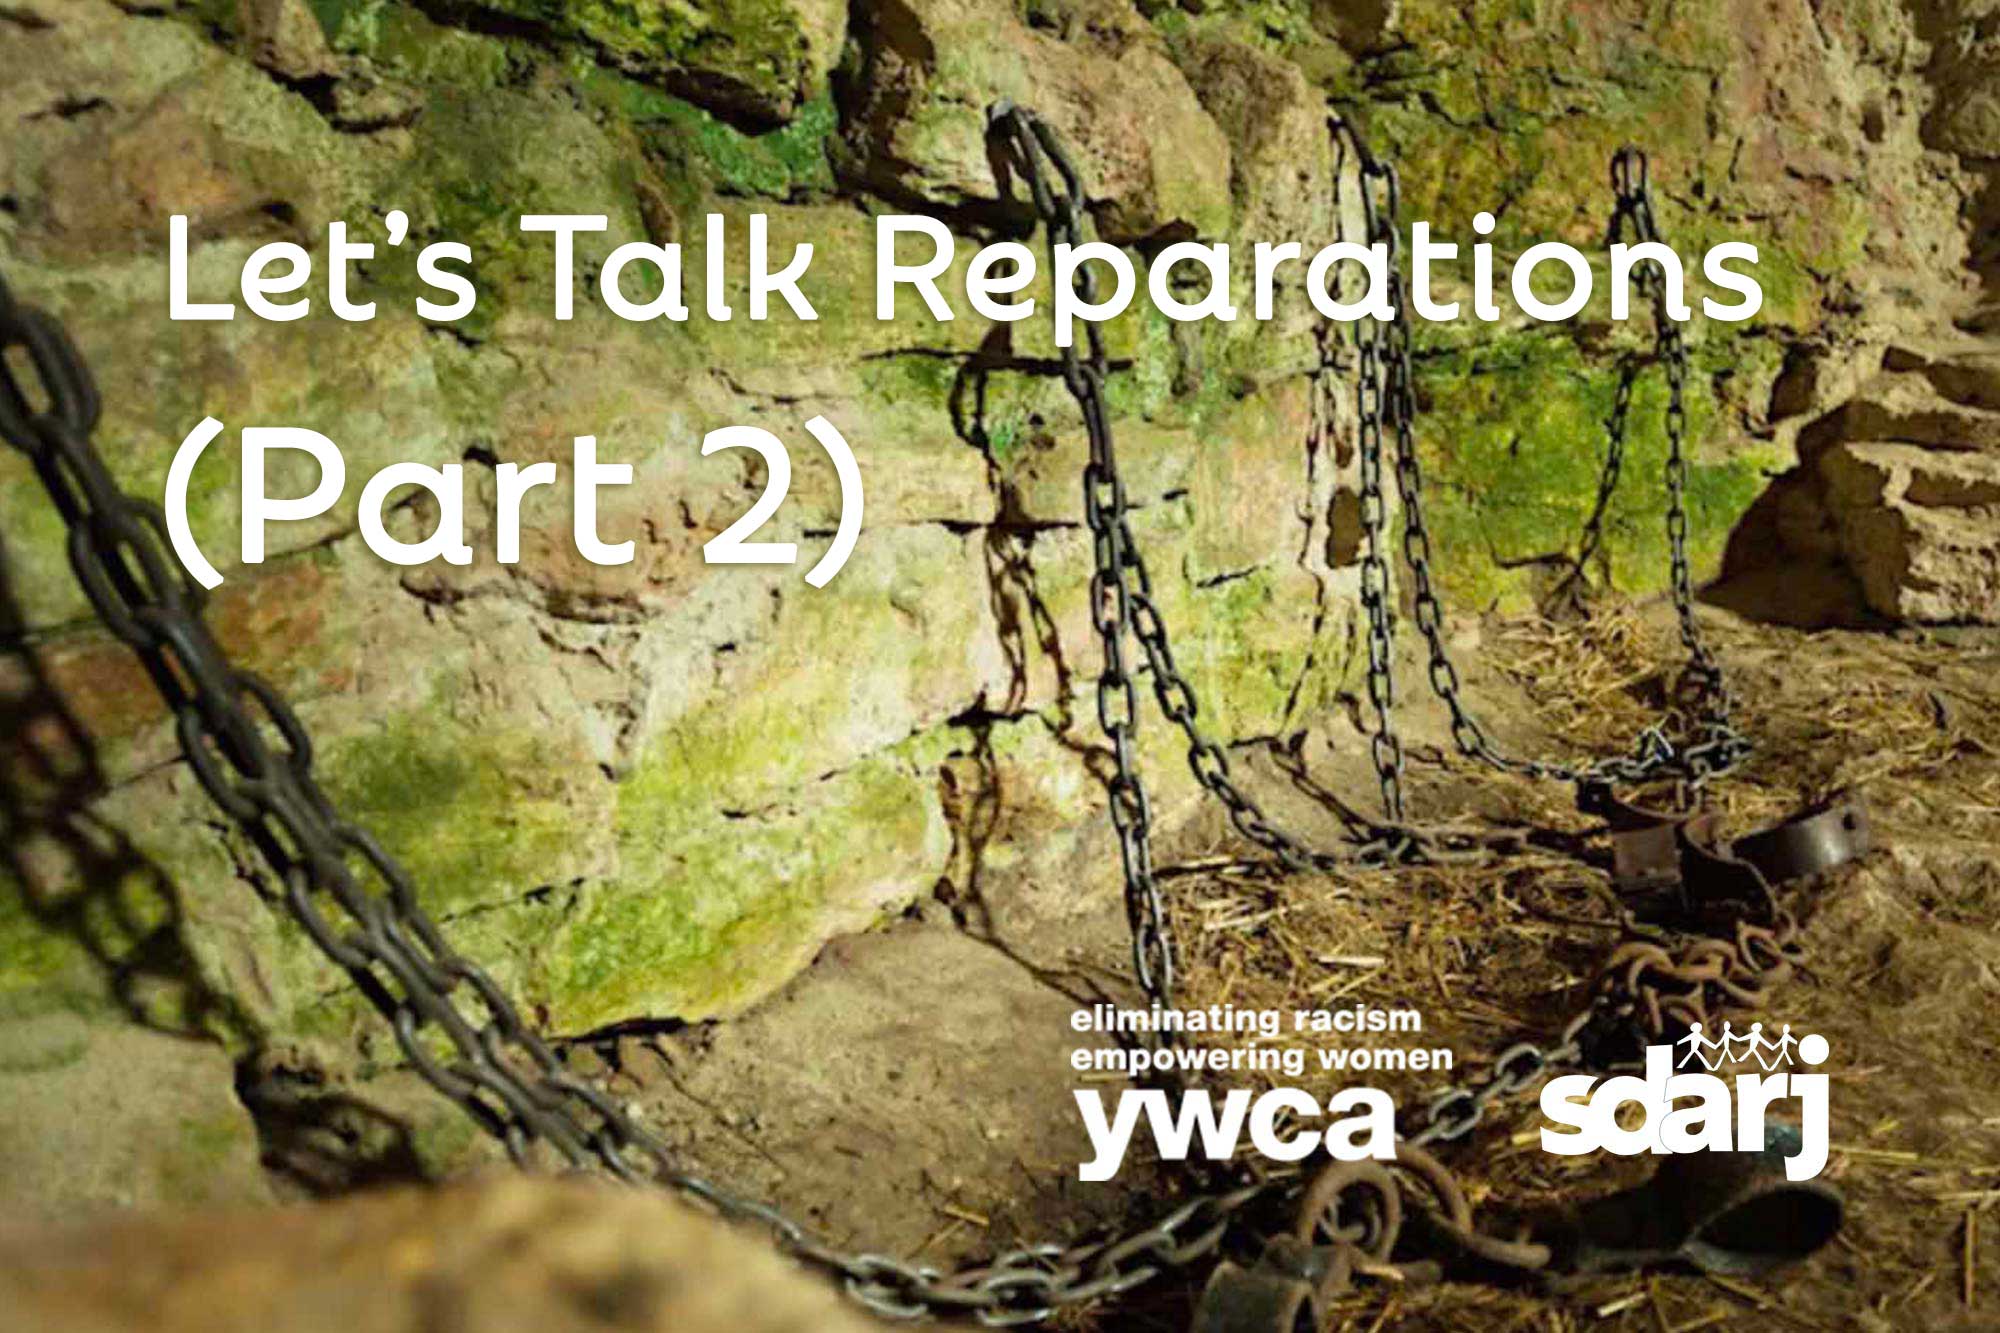 Video: Let’s Talk Reparations Video Part 2